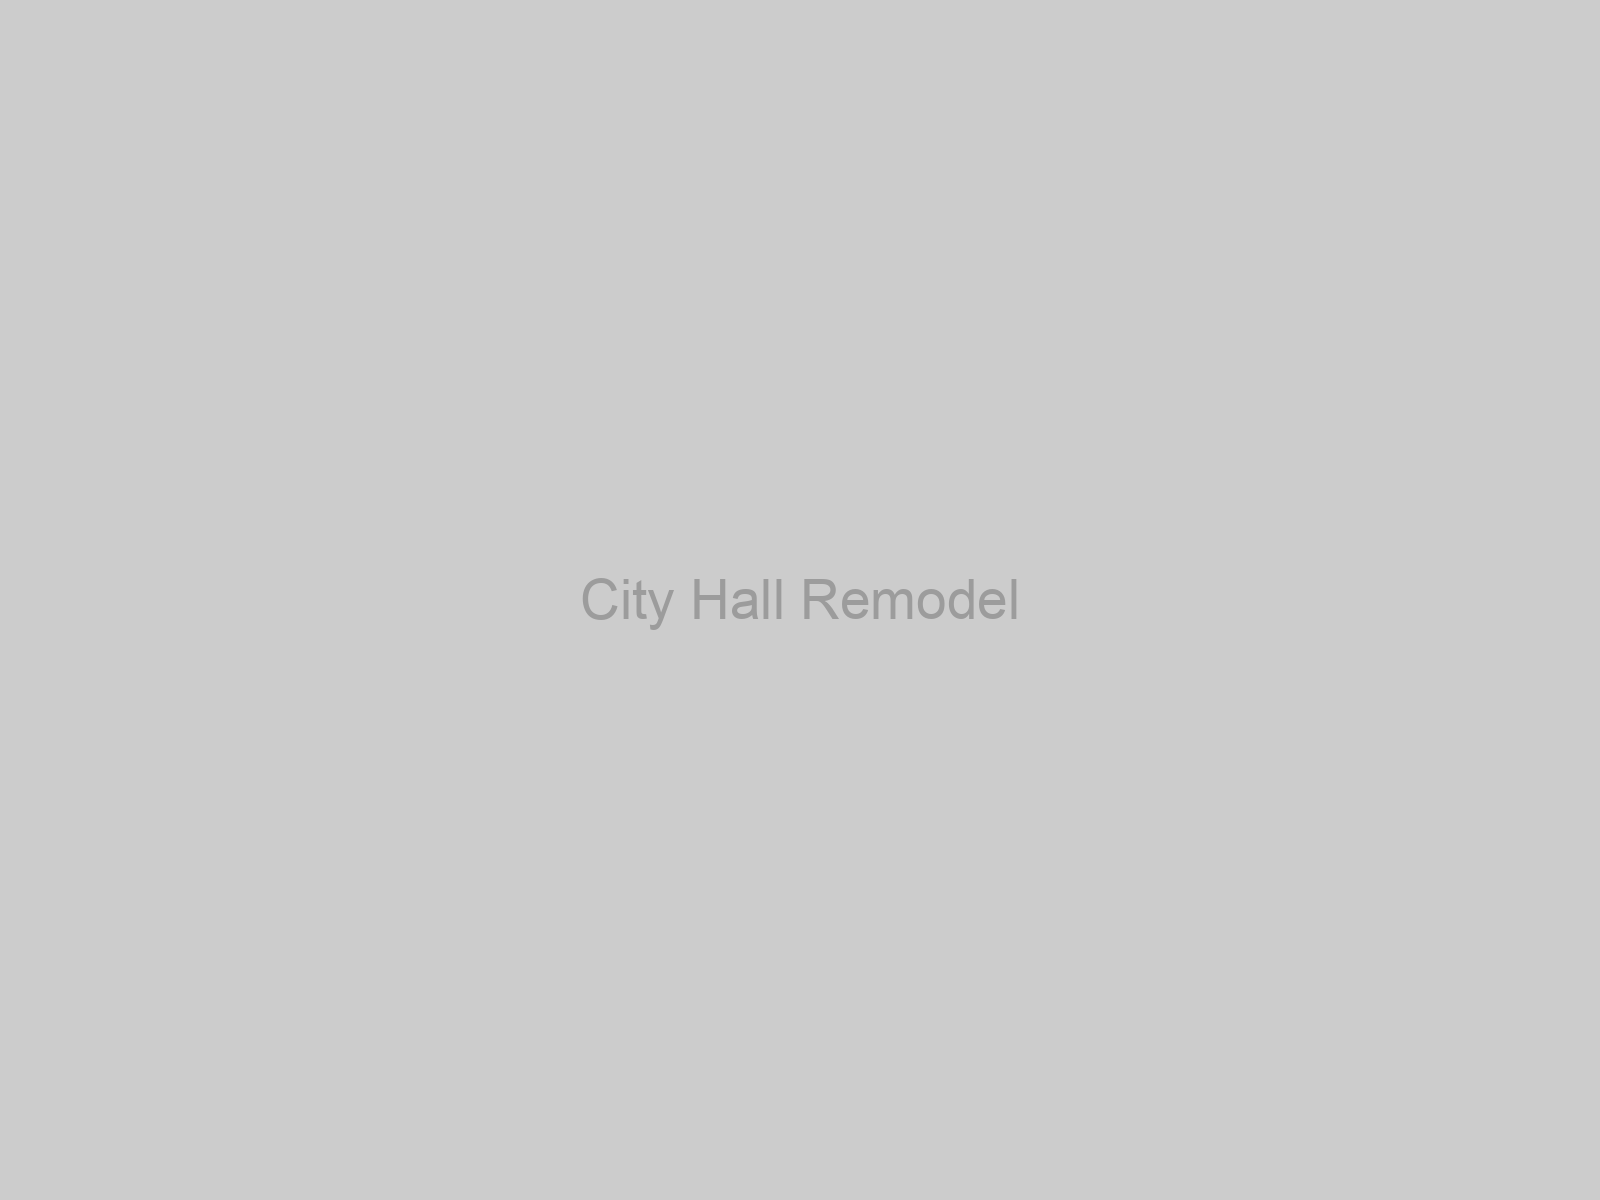 City Hall Remodel